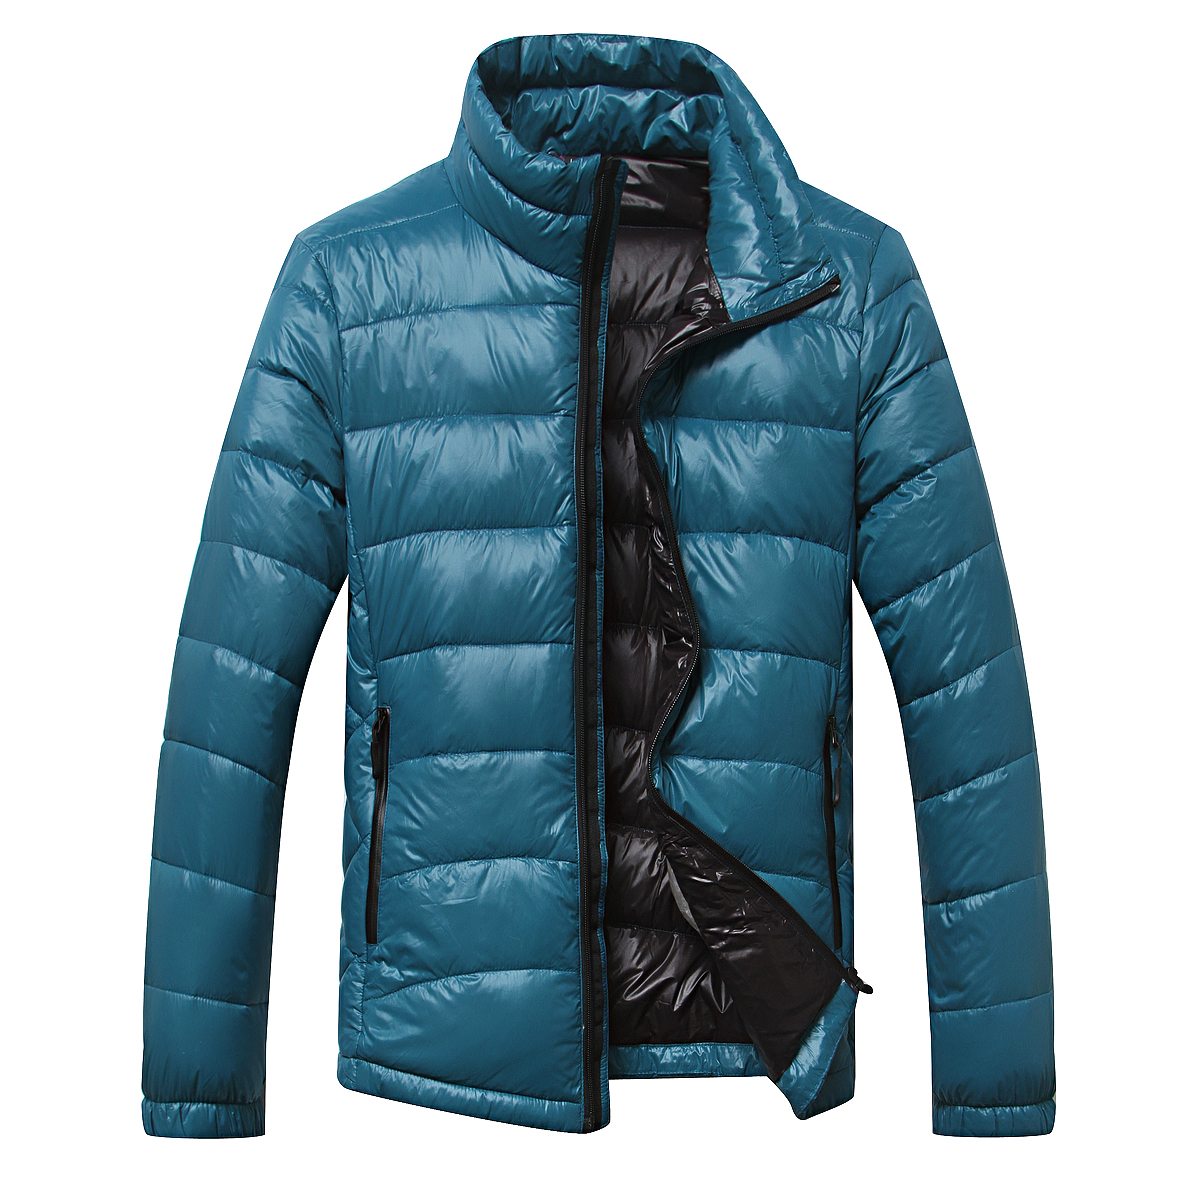 Portable Outdoor Fashion Men's Windbreak Warm Portable Sports Down Jacket Down Clothing/0.3 4013